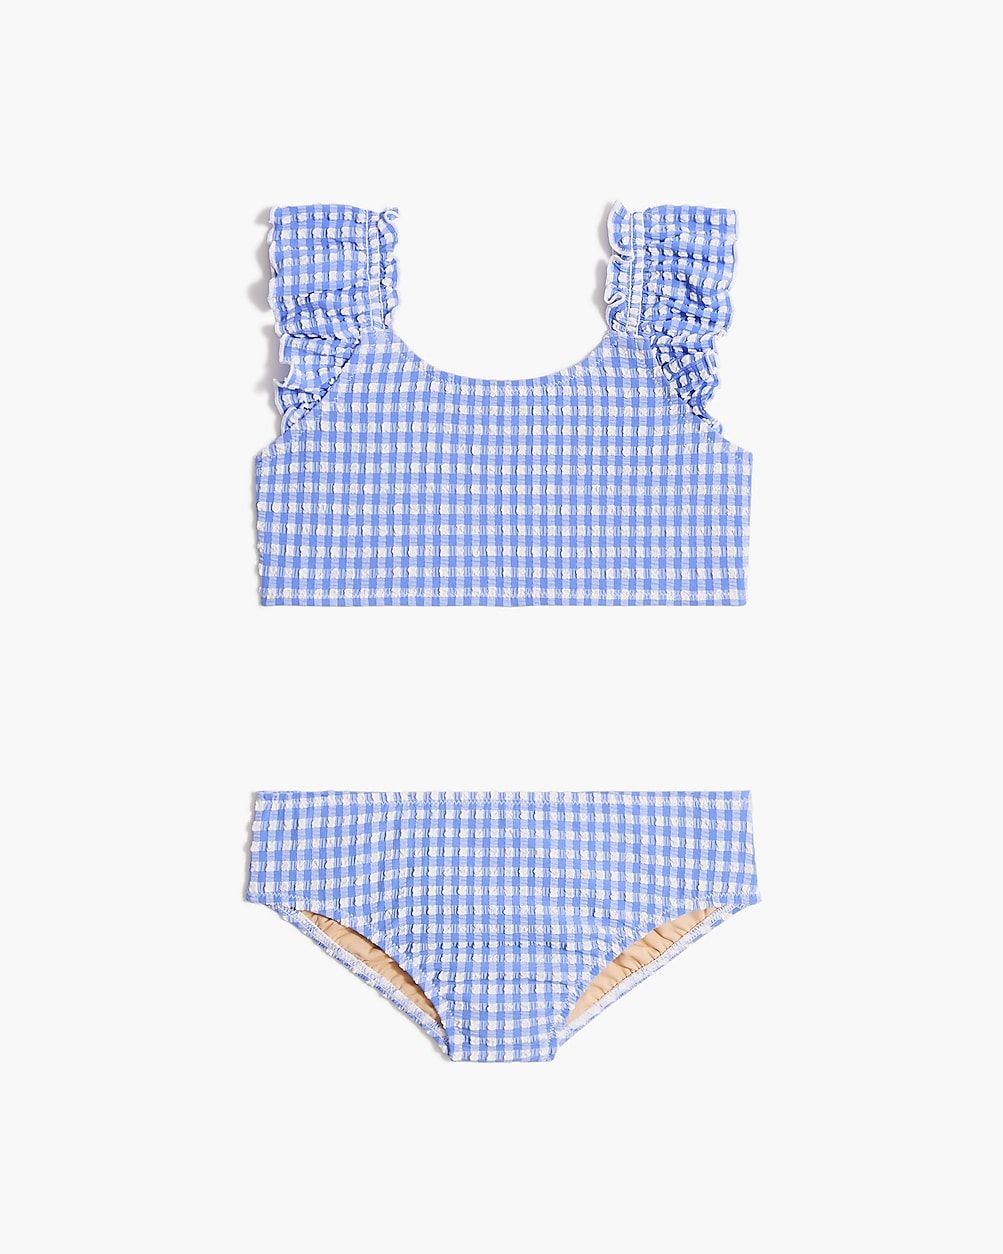 Girls' seersucker ruffle-strap bikini set | J.Crew Factory